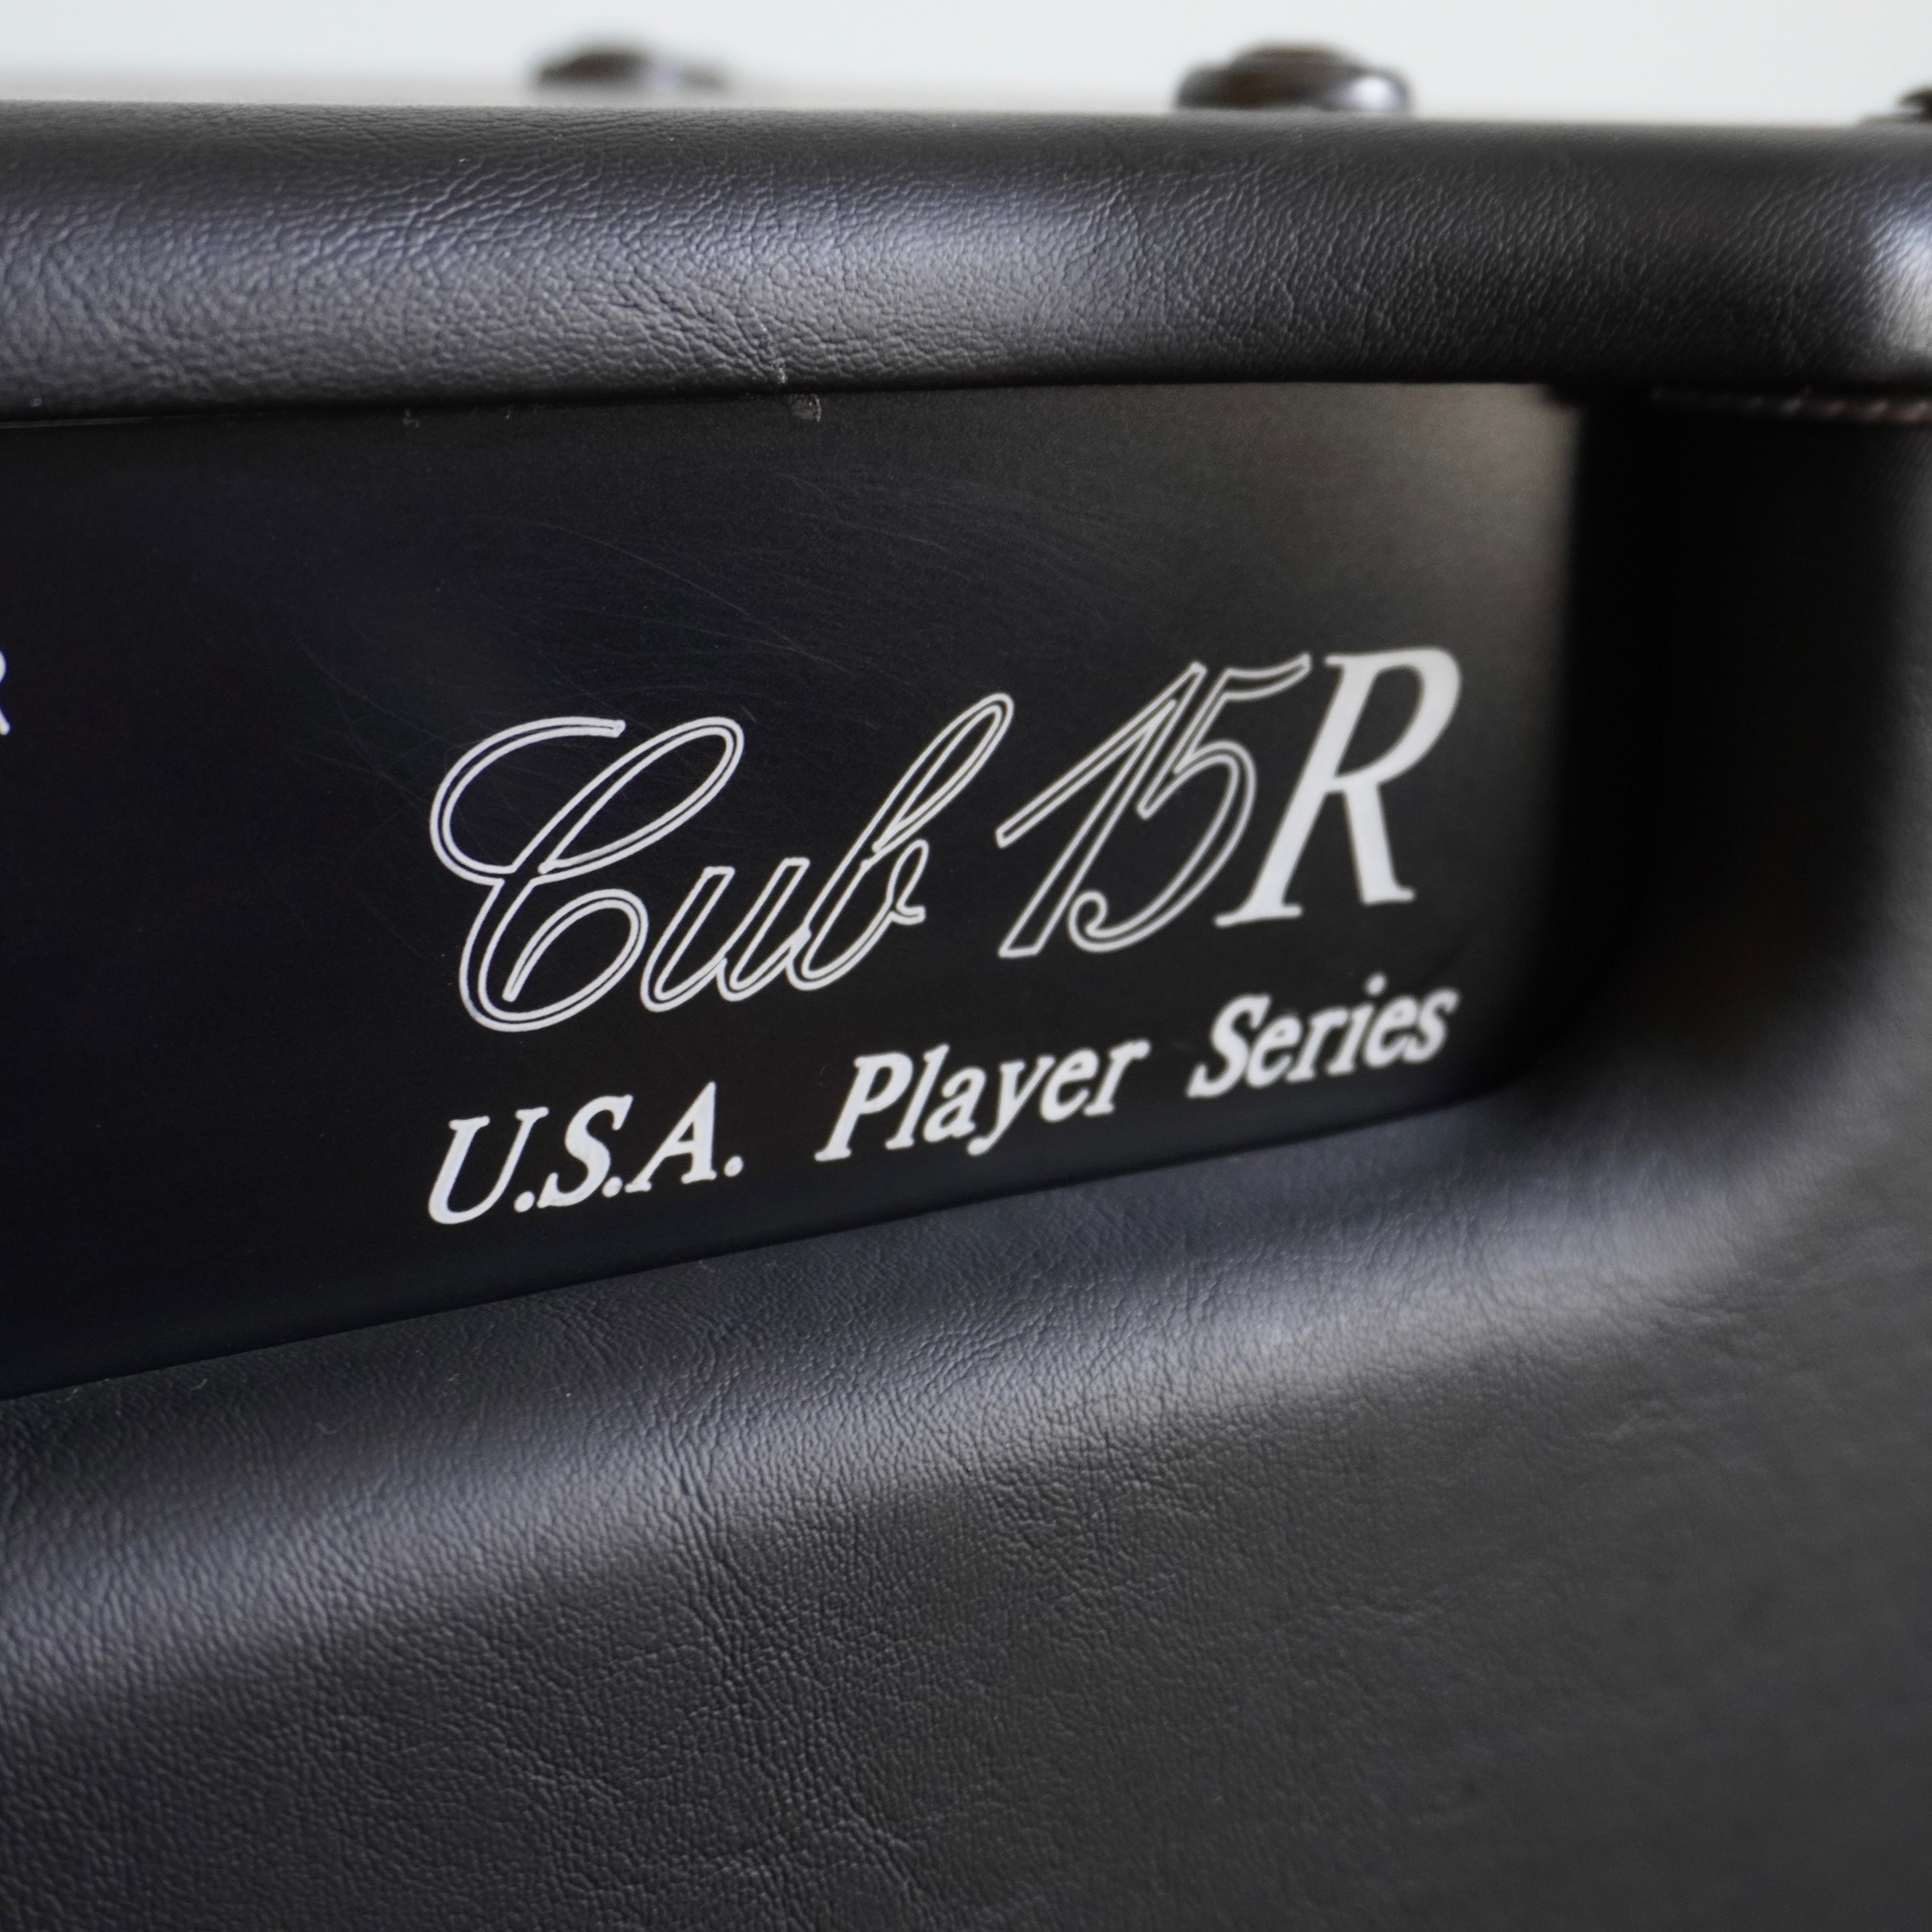 Cub 15R U.S.A. Player Series